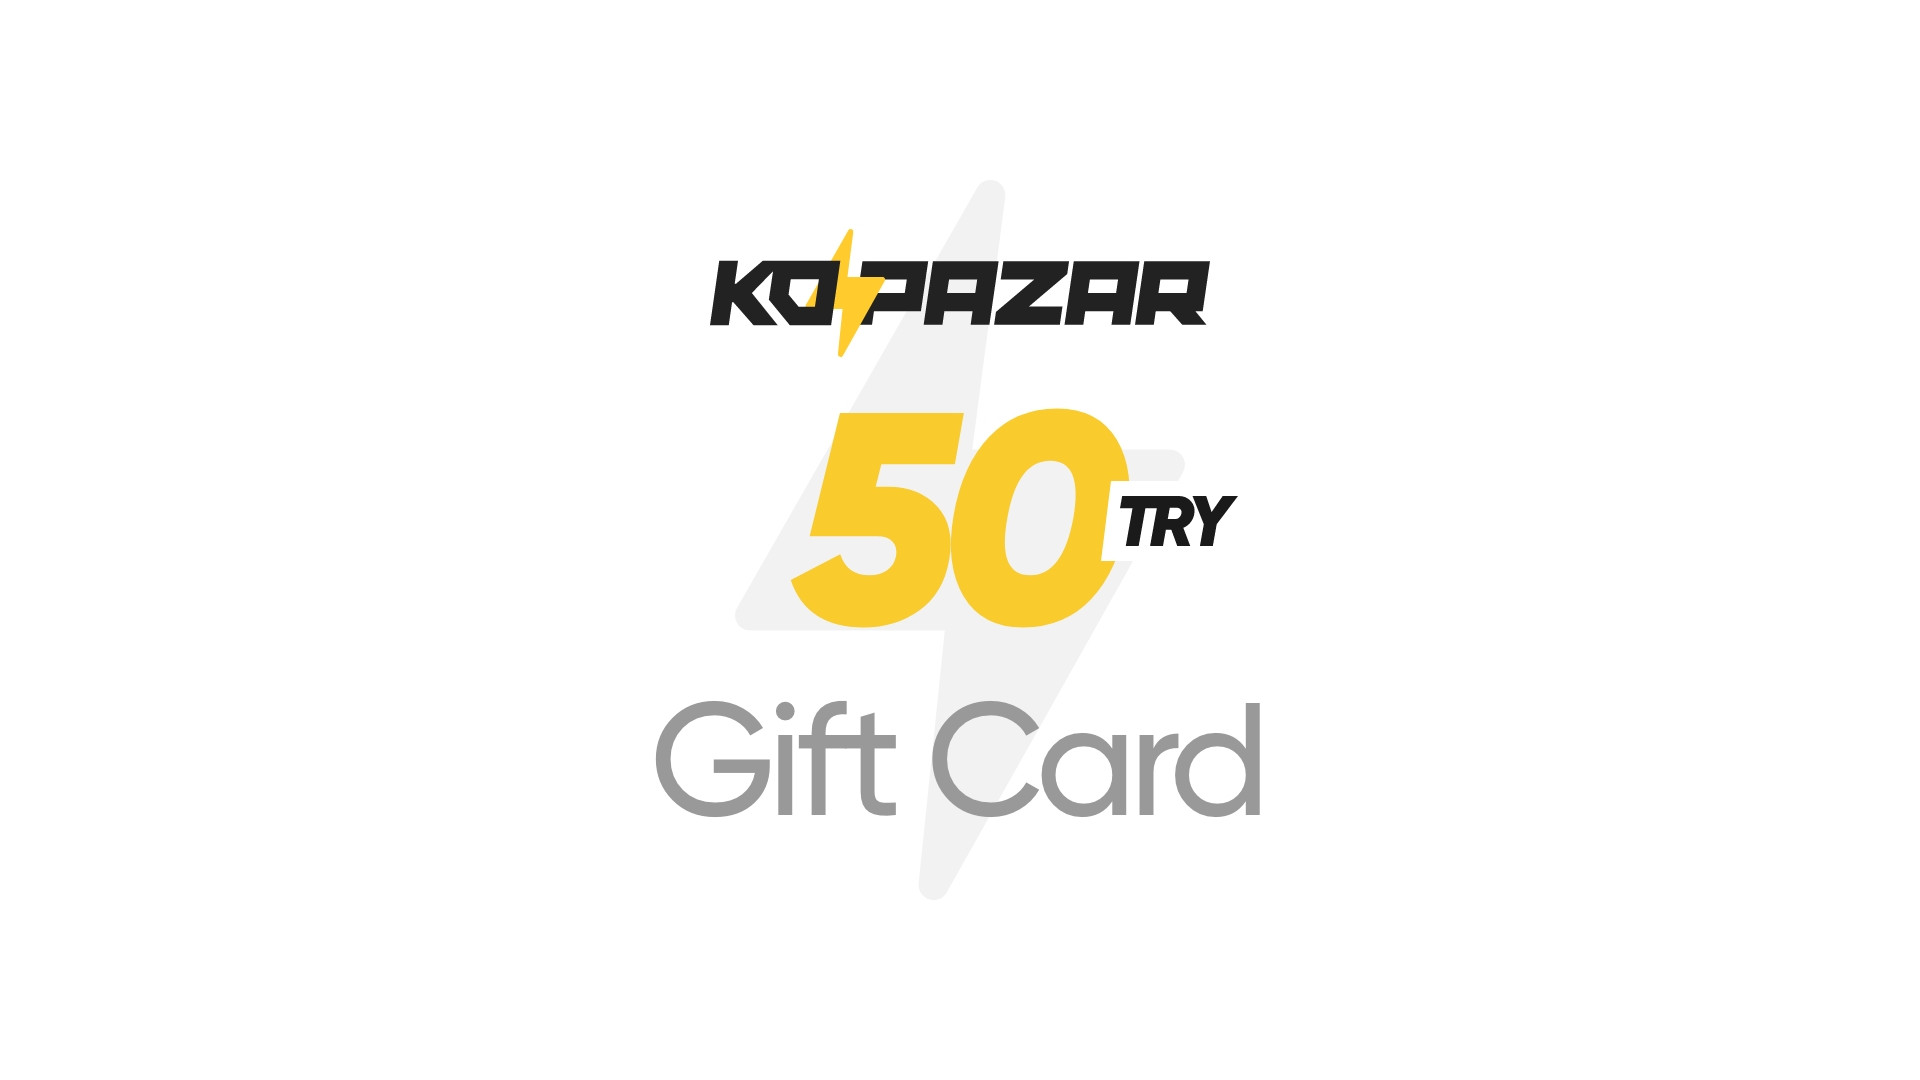 Kopazar 50 TRY Gift Card 2.09 usd